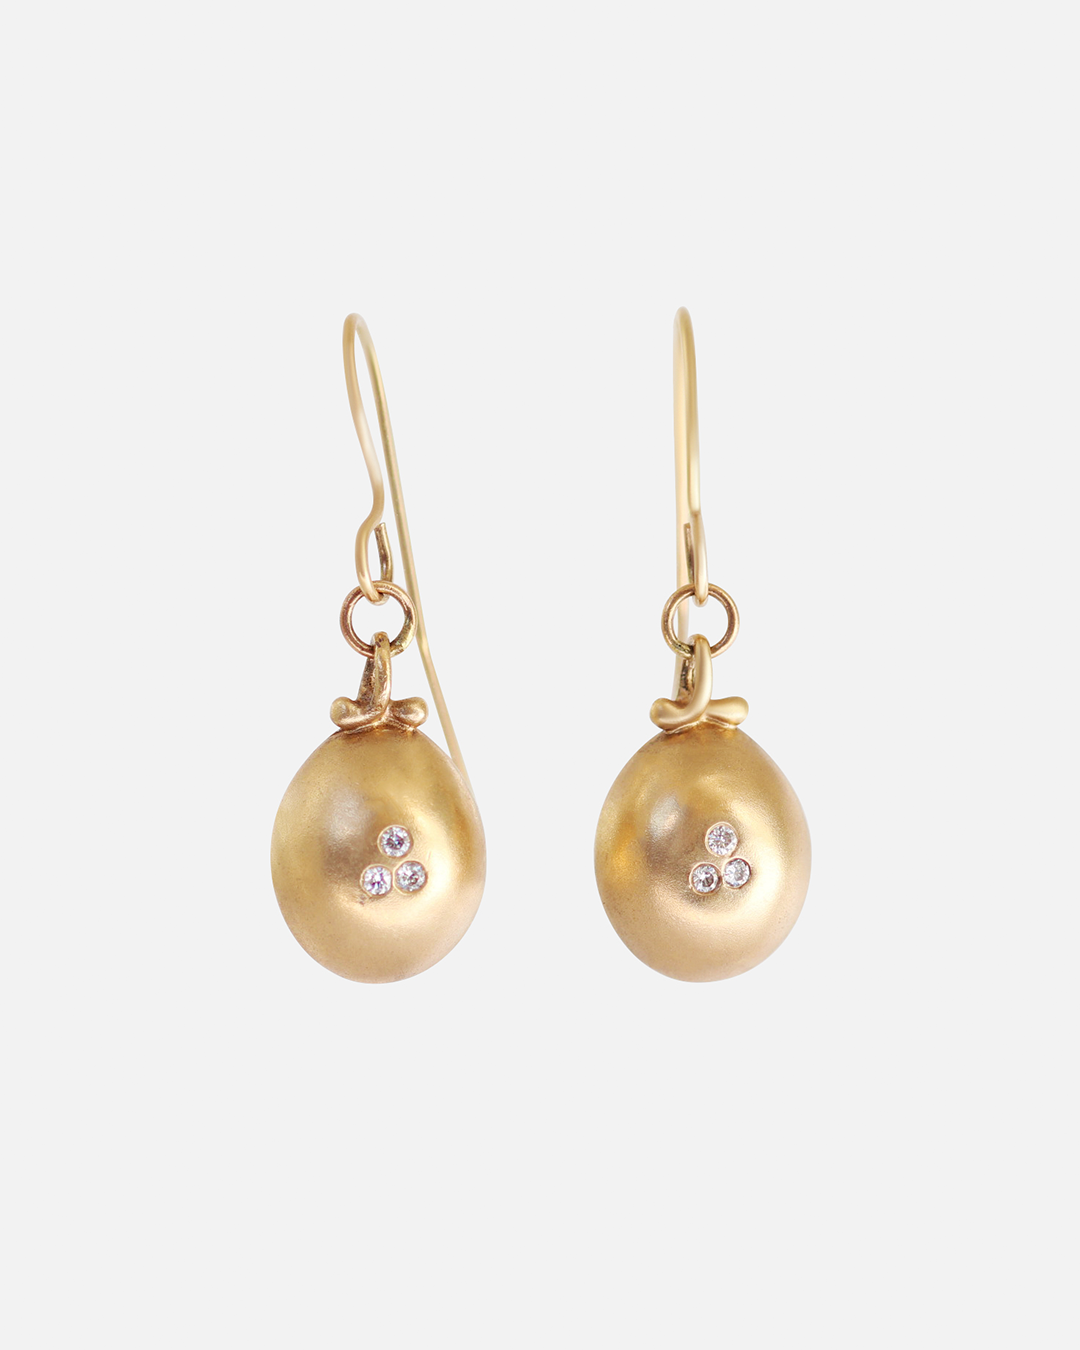 Eggplant / Yellow Gold + Diamond Earrings By fitzgerald jewelry in earrings Category